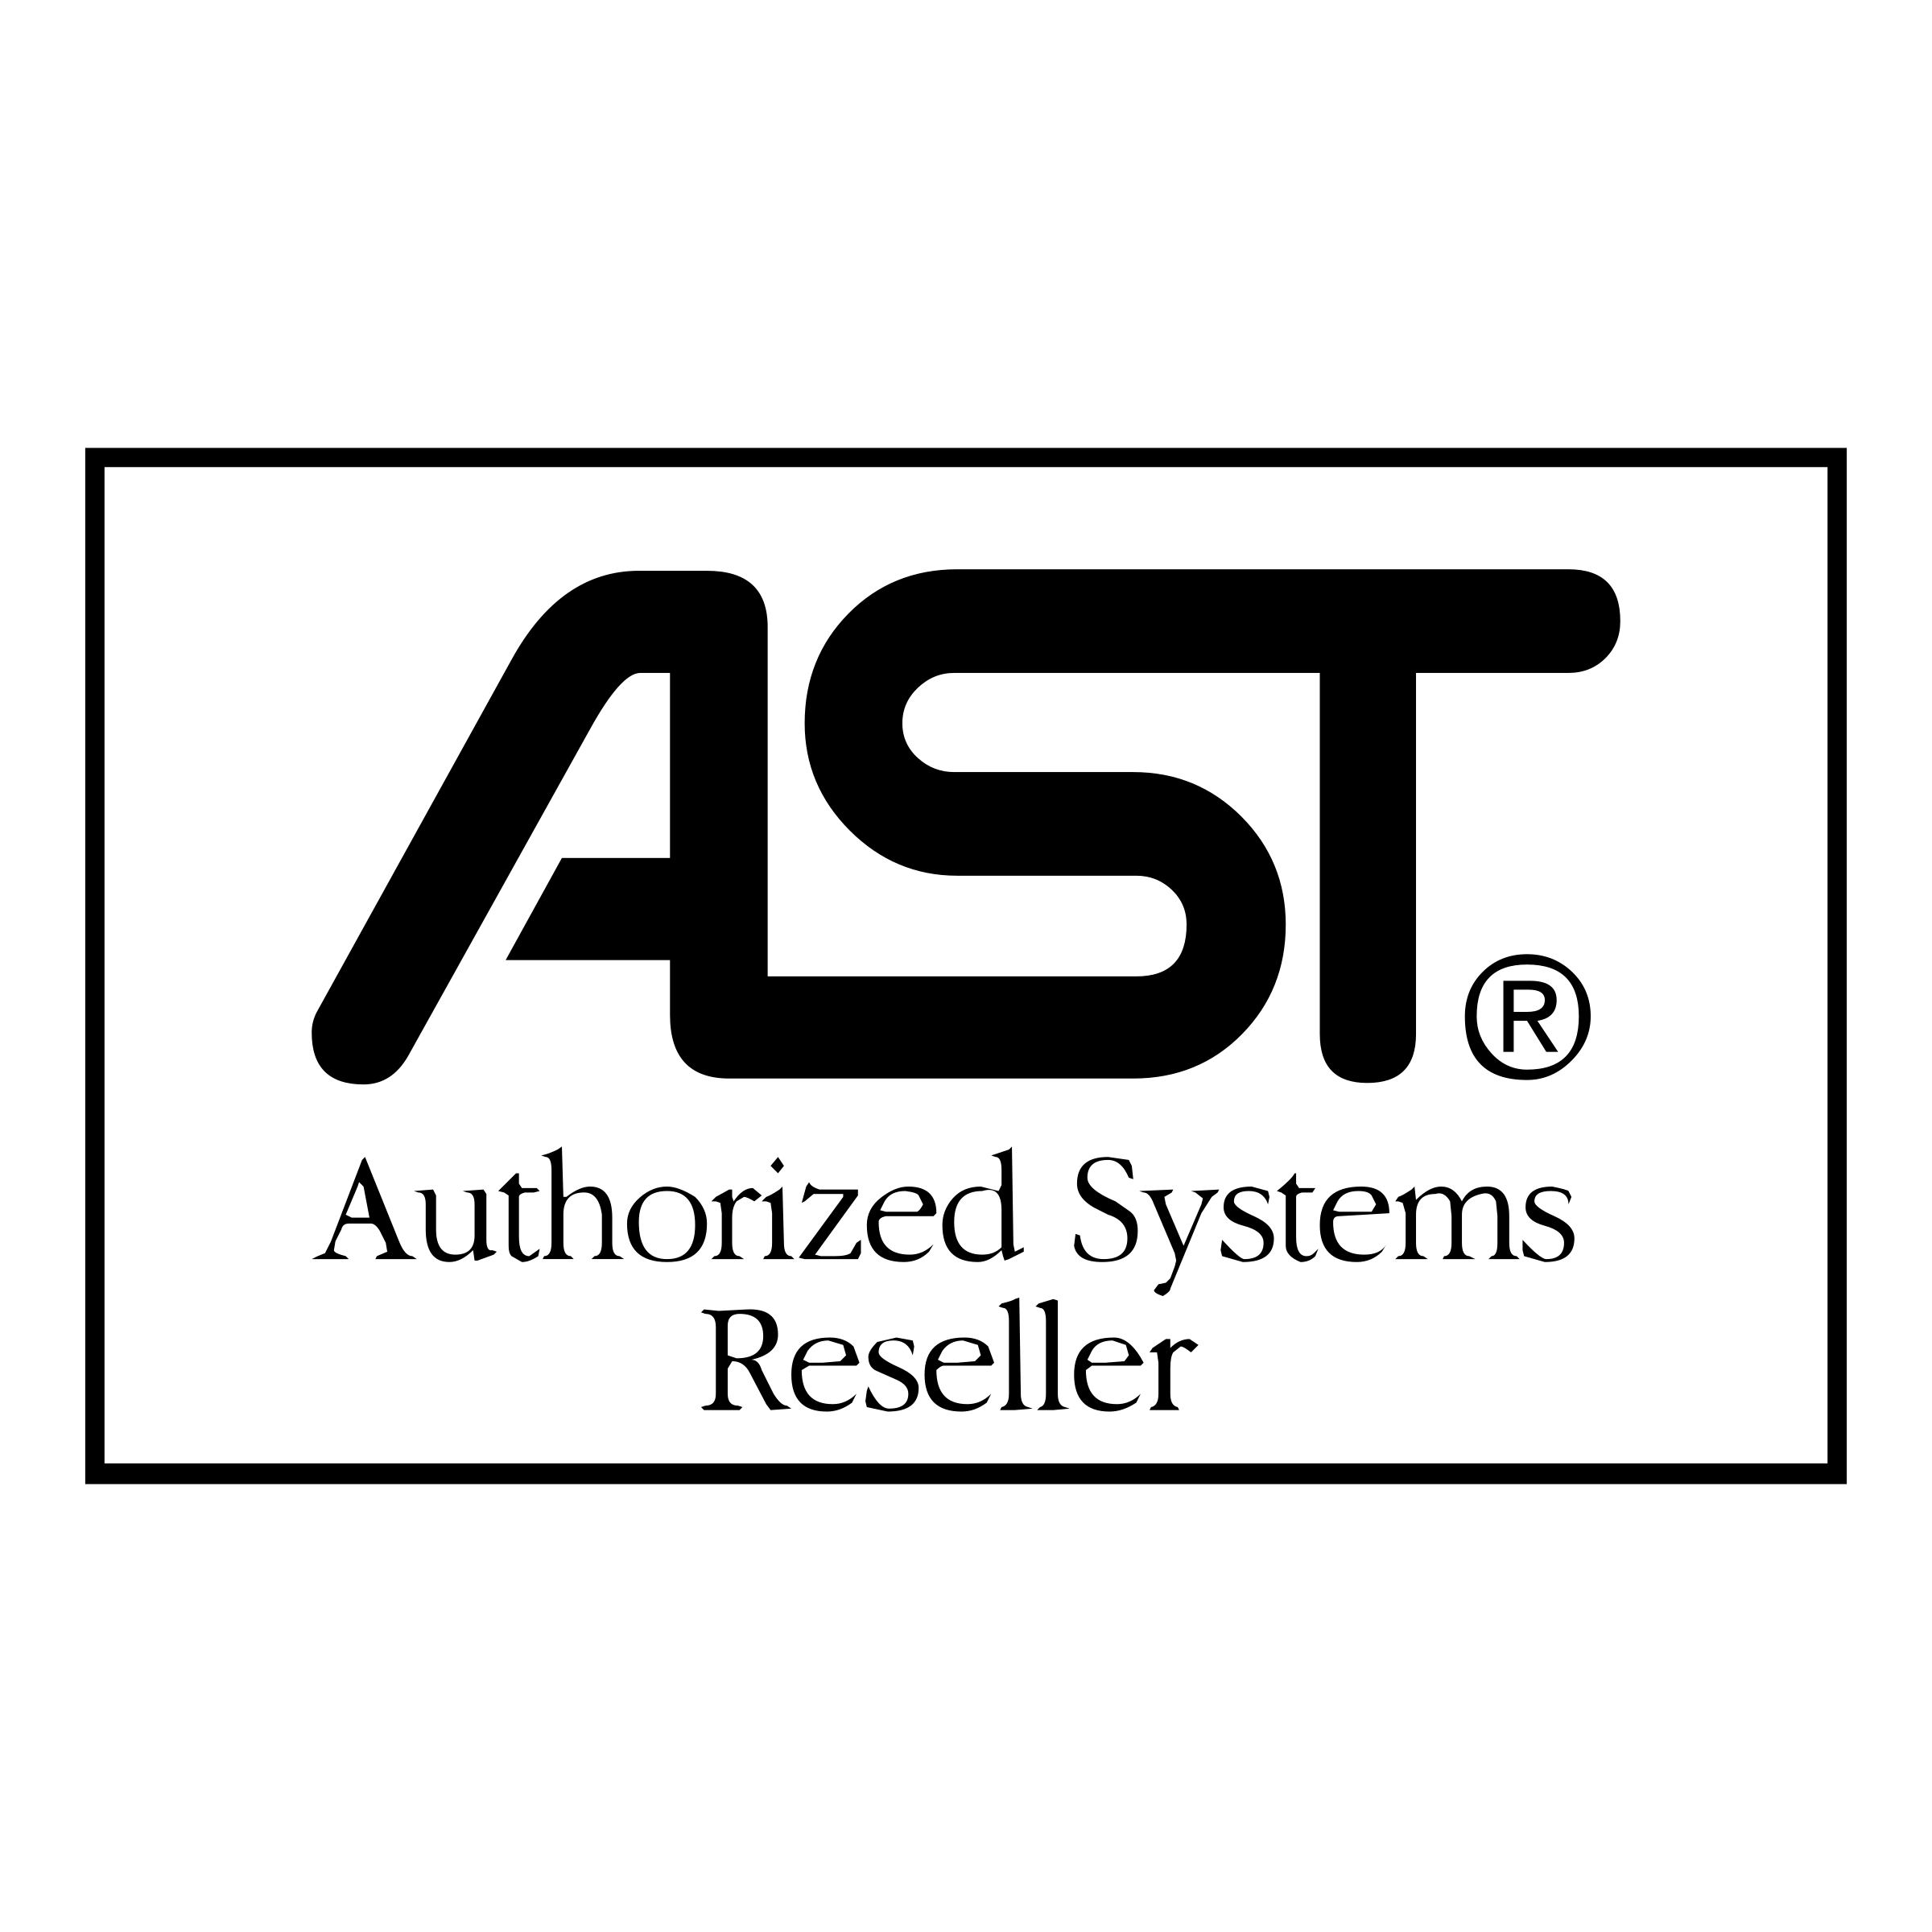 AST Logo - AST Logo PNG Transparent & SVG Vector - Freebie Supply